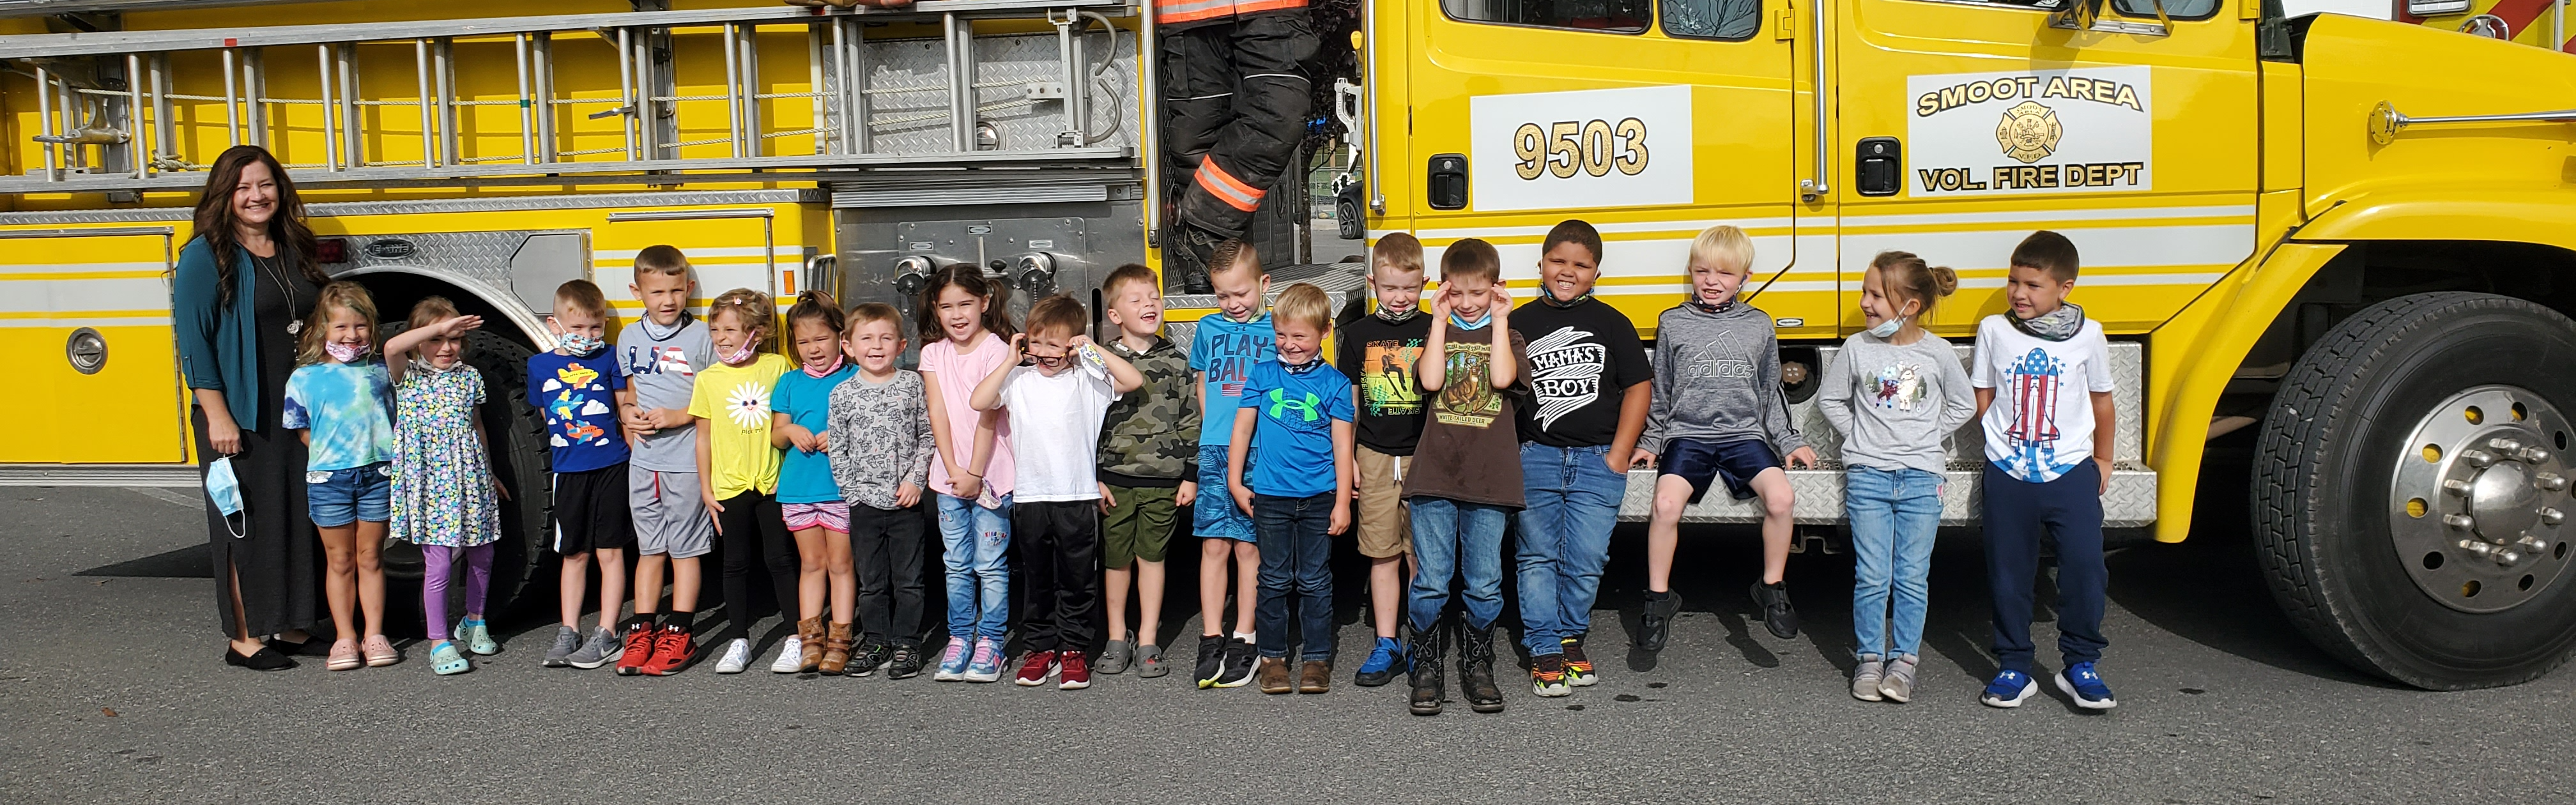 kids and firetruck